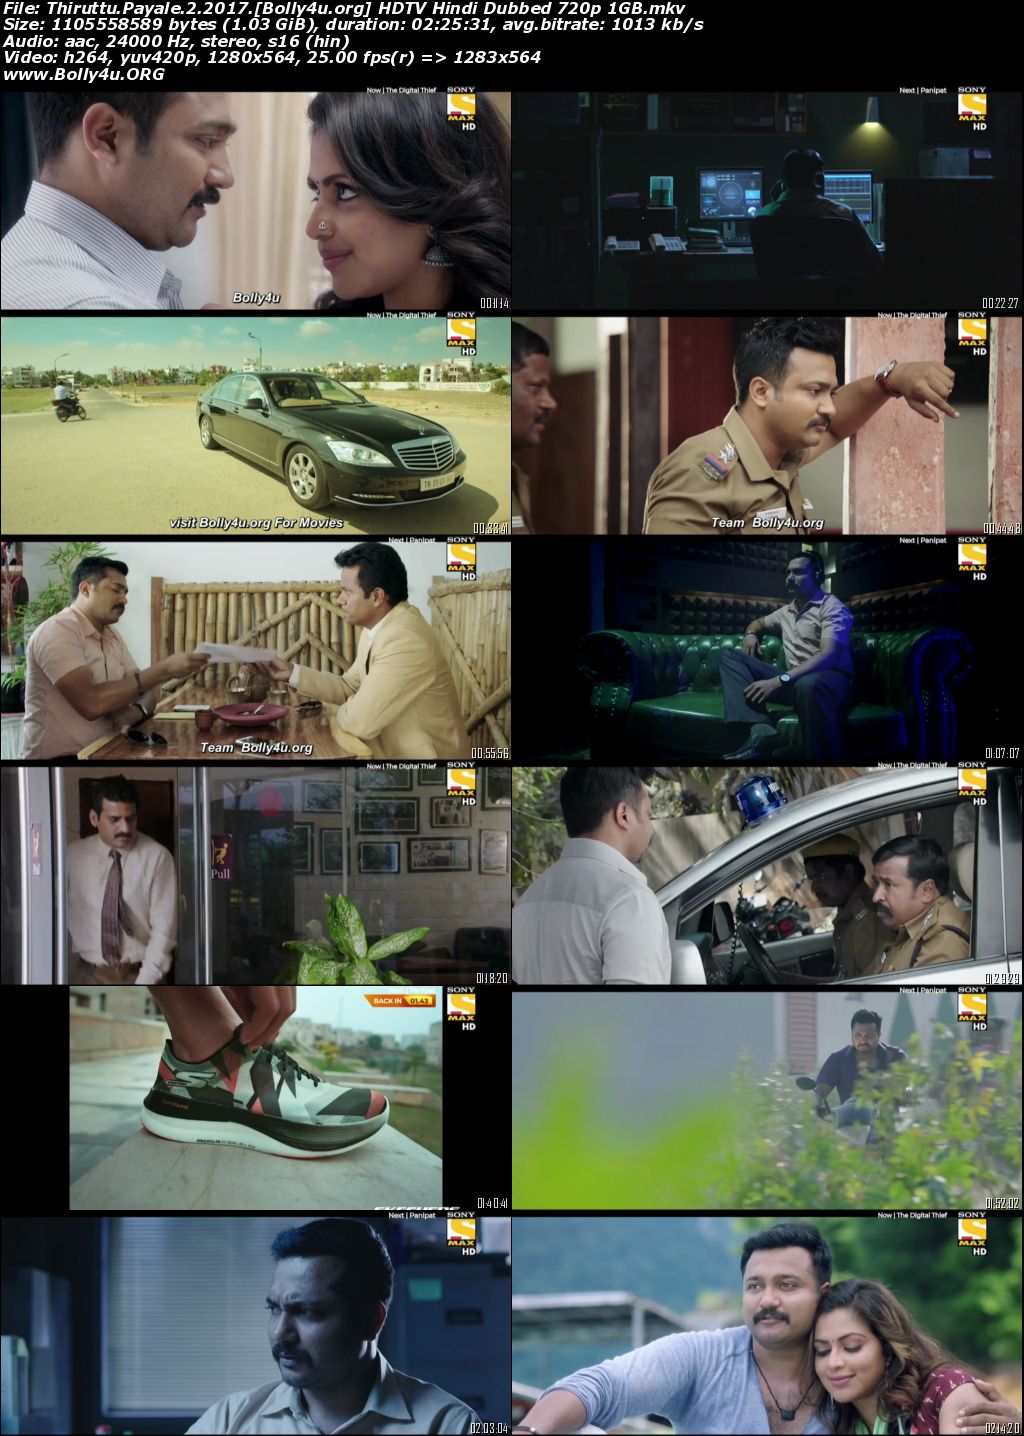 Thiruttu Payale 2 2017 HDTV Hindi Dubbed Full Movie Download